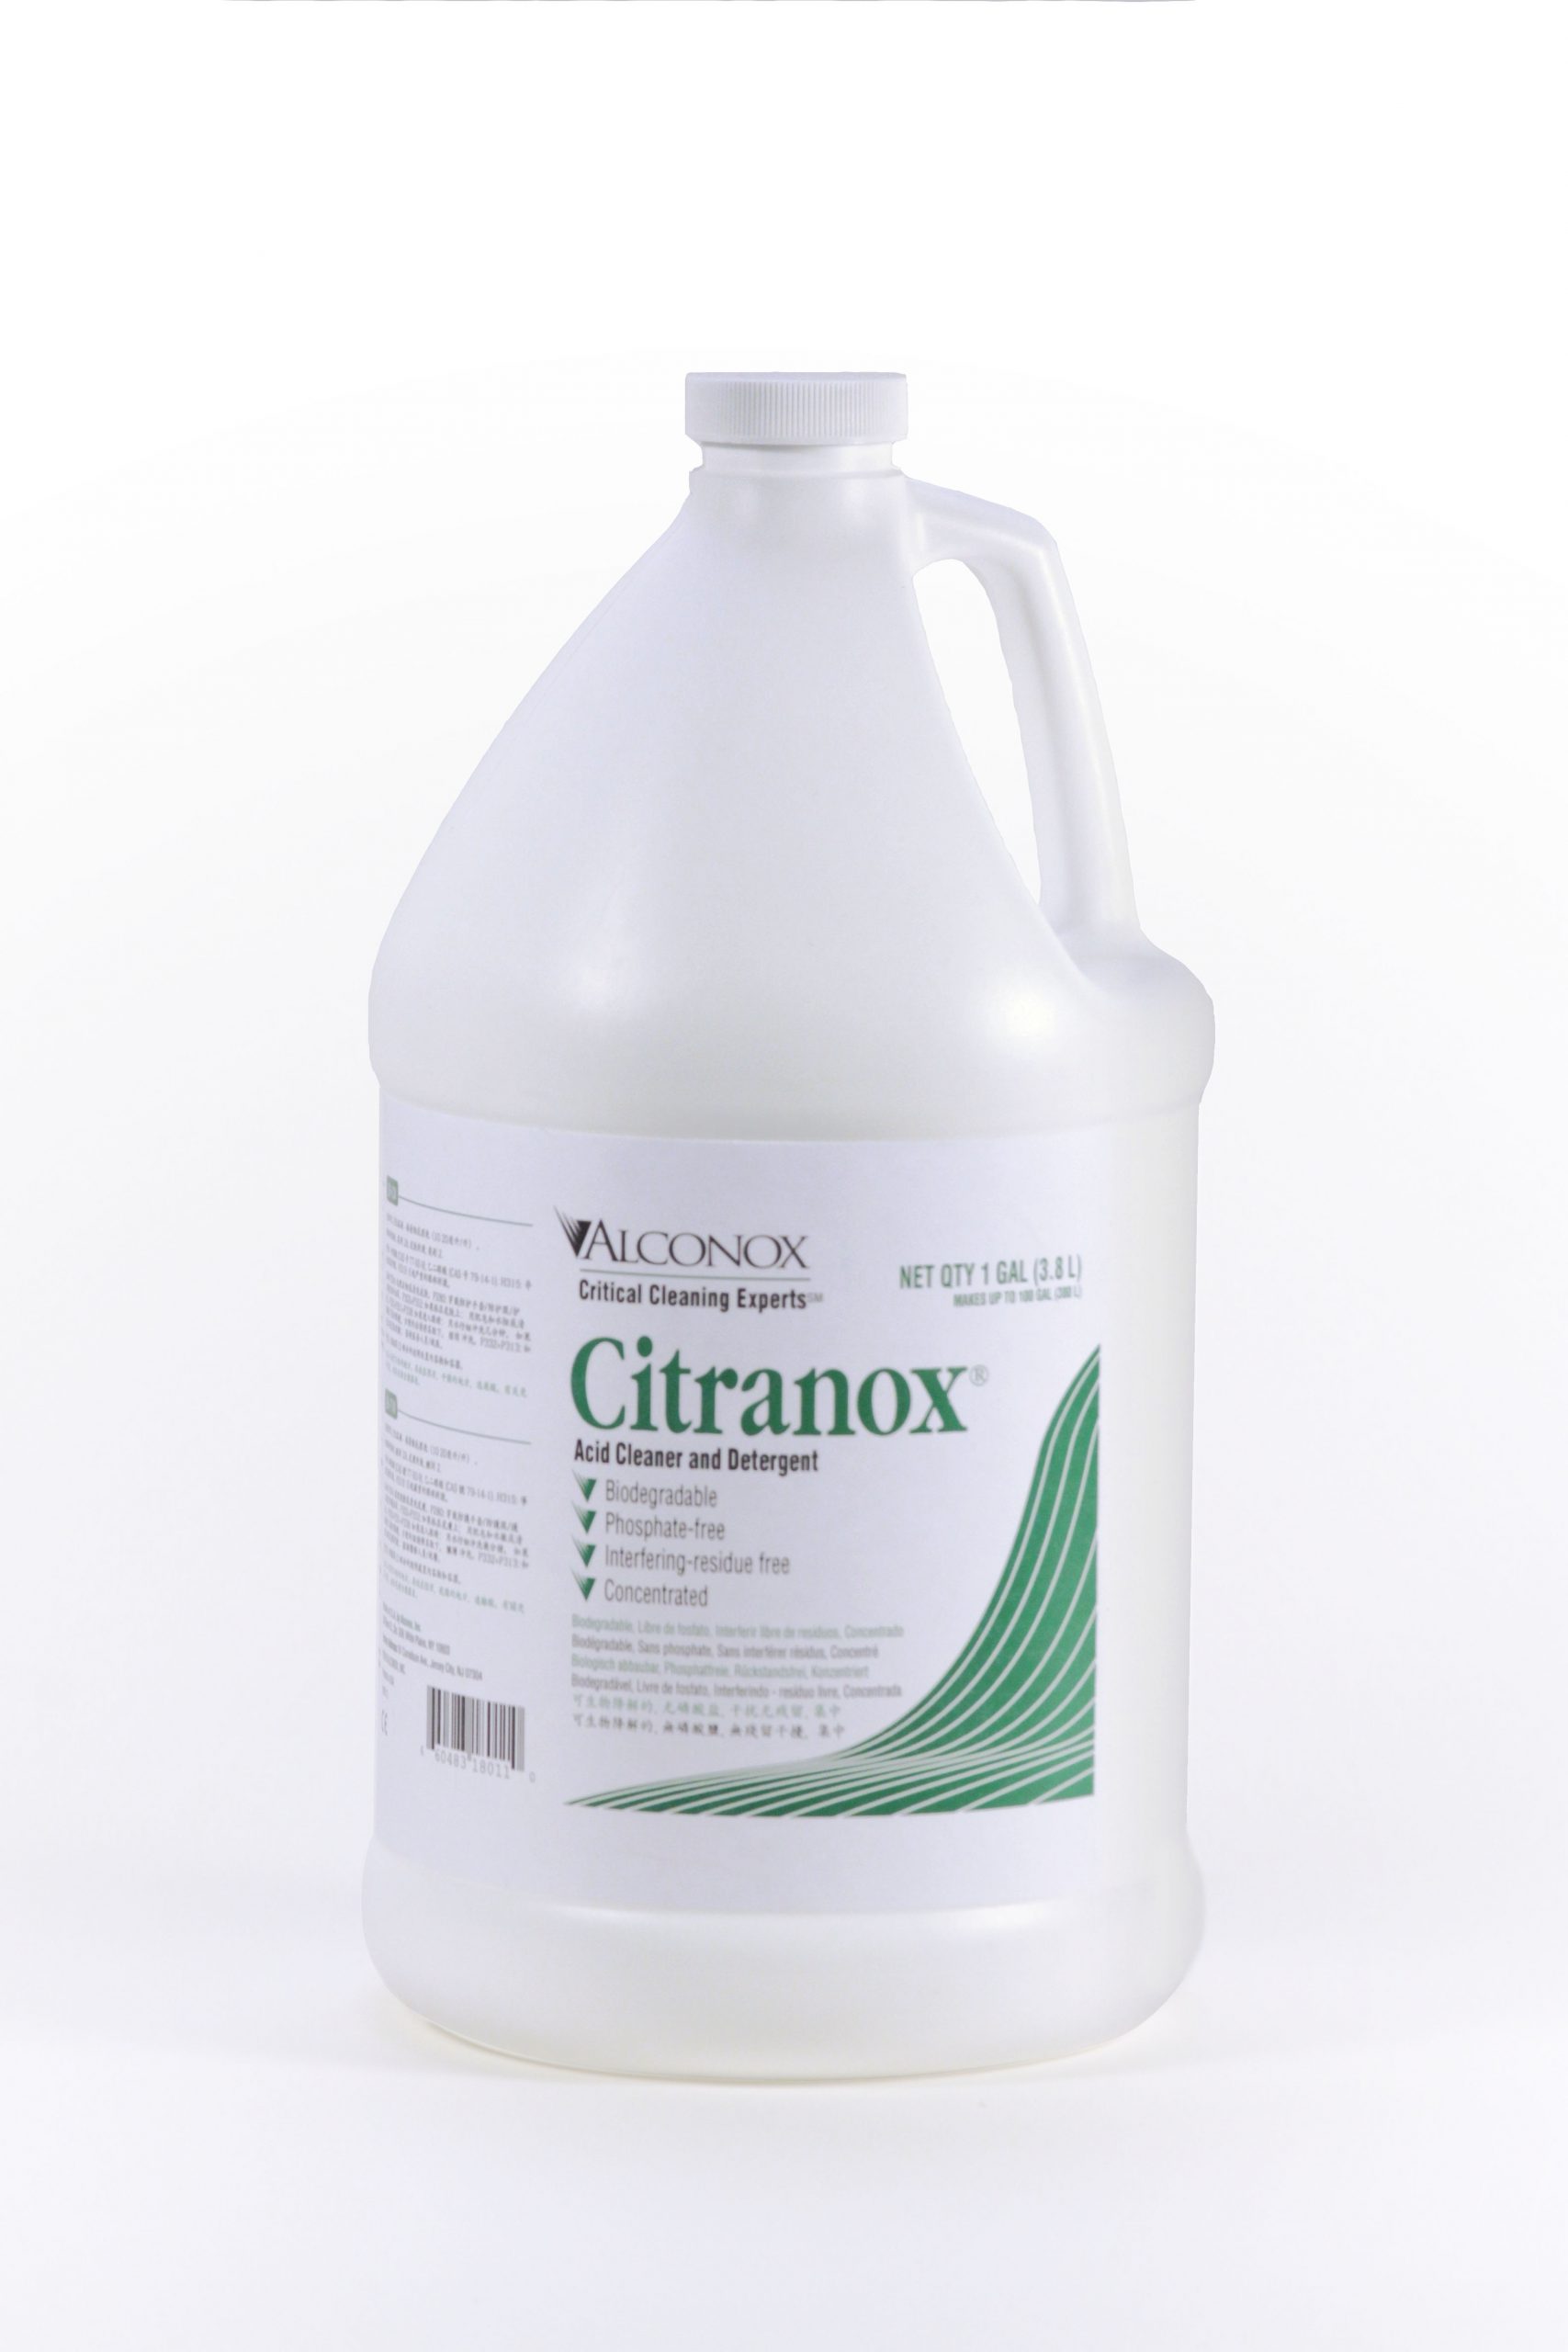 Citranox Acid Cleaner and Detergent